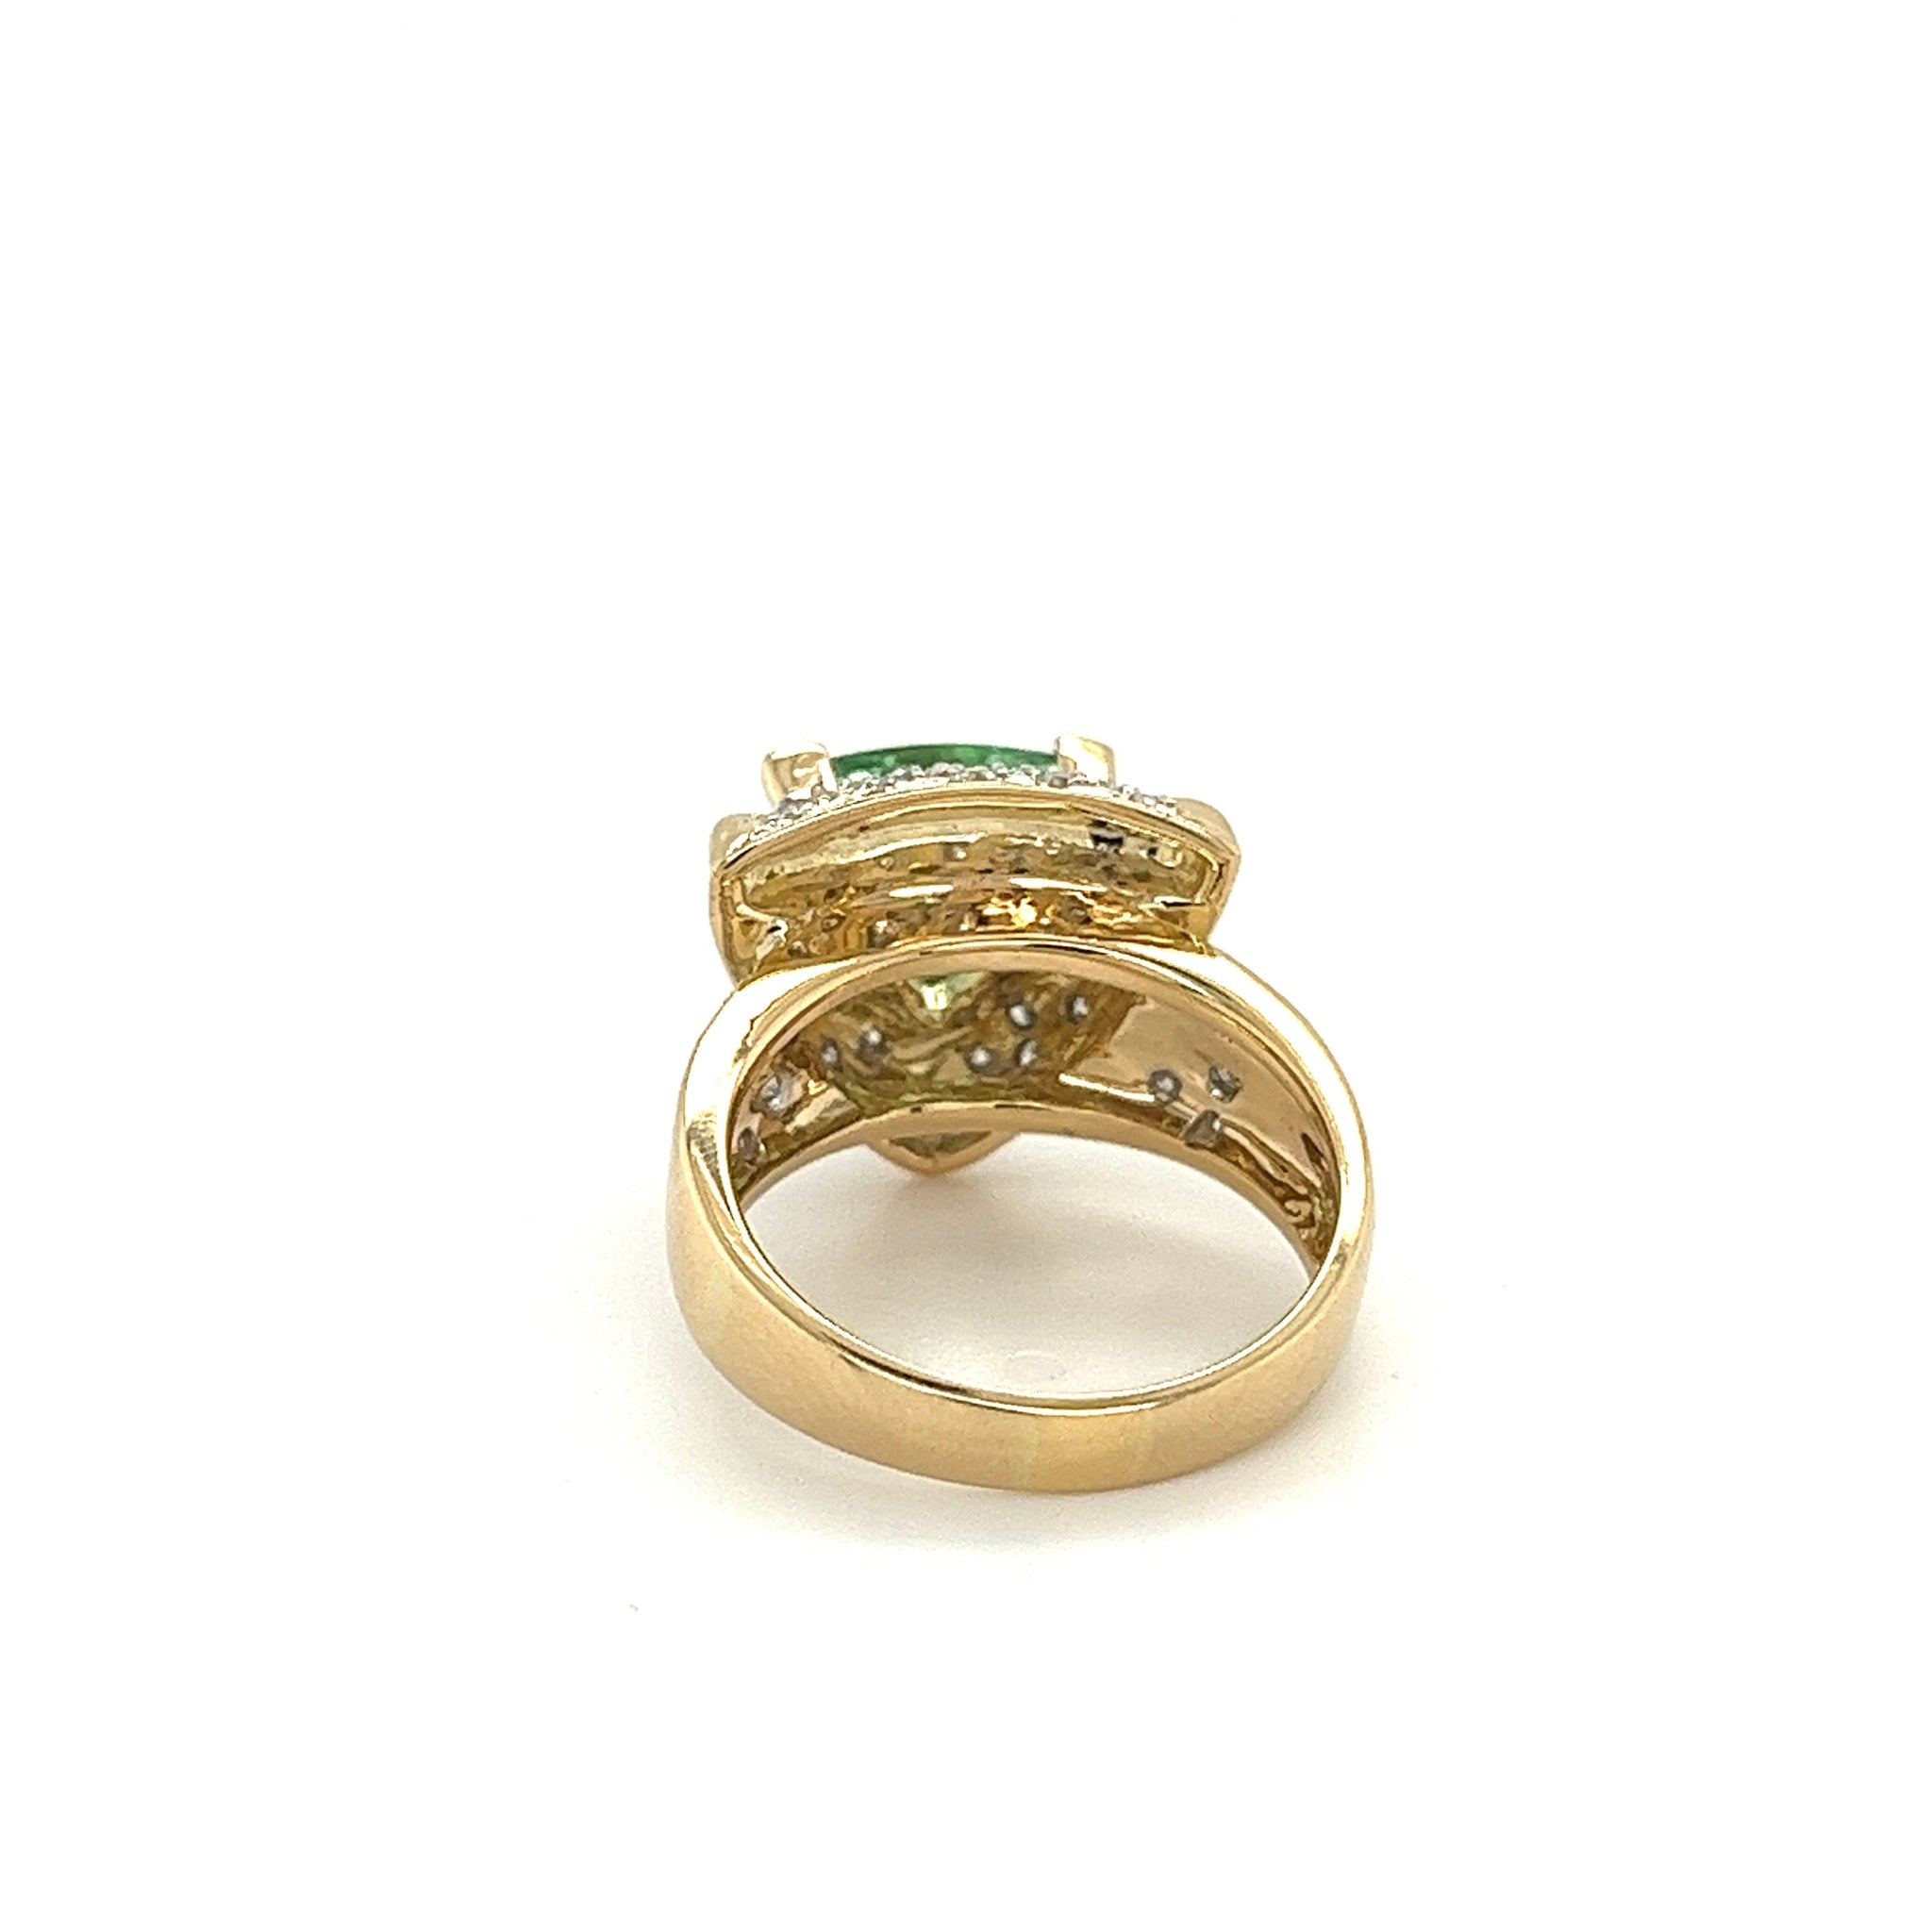 7 Carat Trilliant Cut Watermelon Green Tourmaline with Diamond Sides in 18K Gold 2 Tone Ring-Semi Precious Jewelry-ASSAY